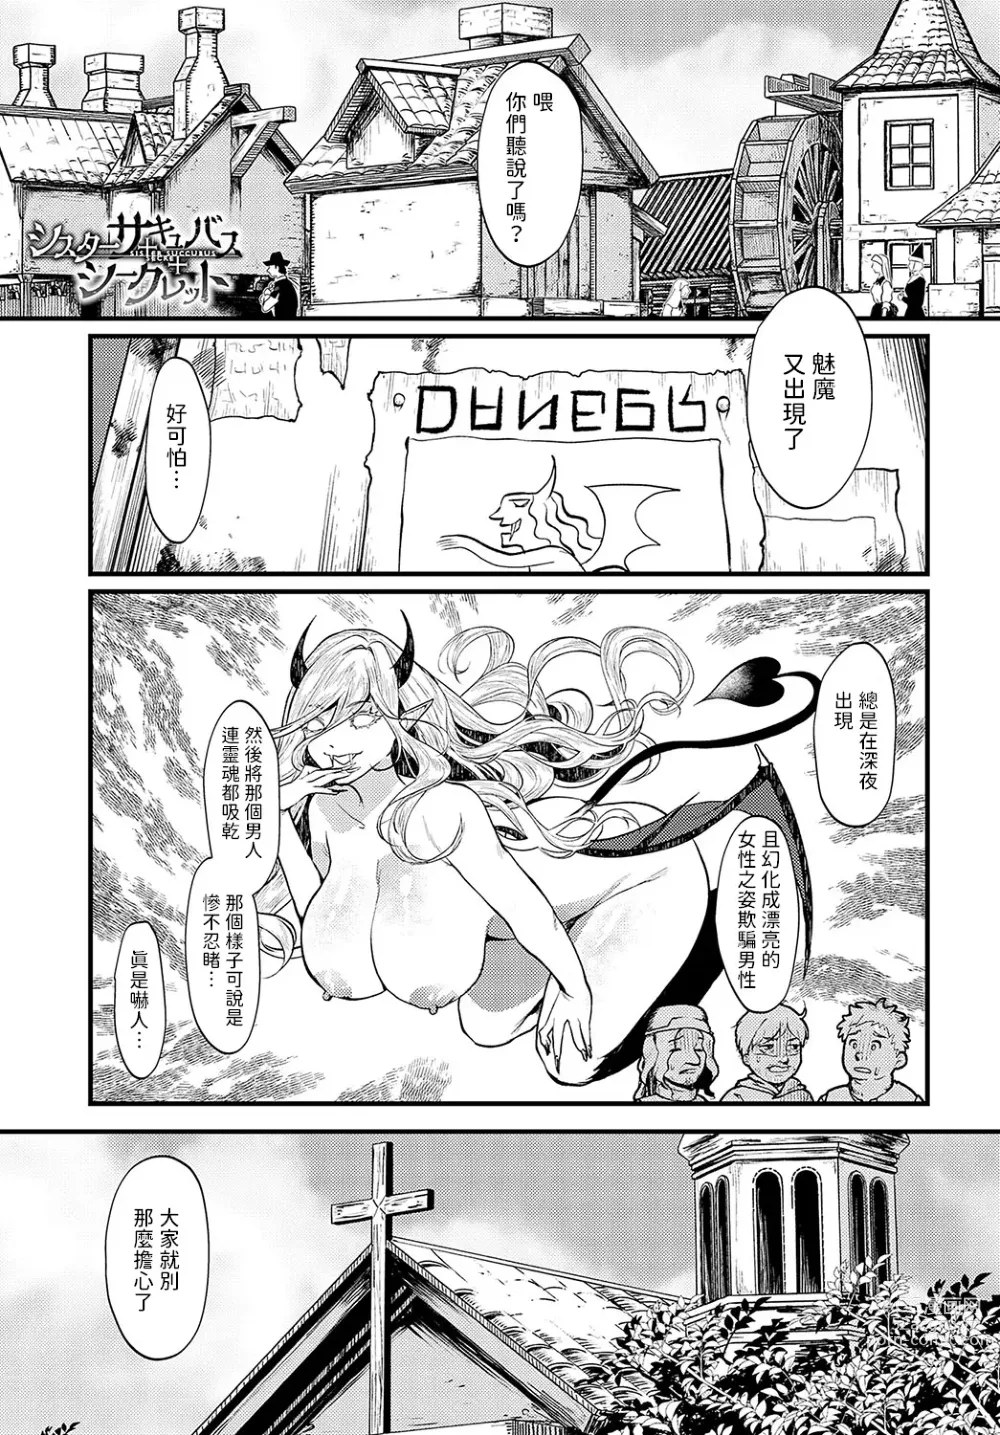 Page 1 of manga Sister Succubus Secret